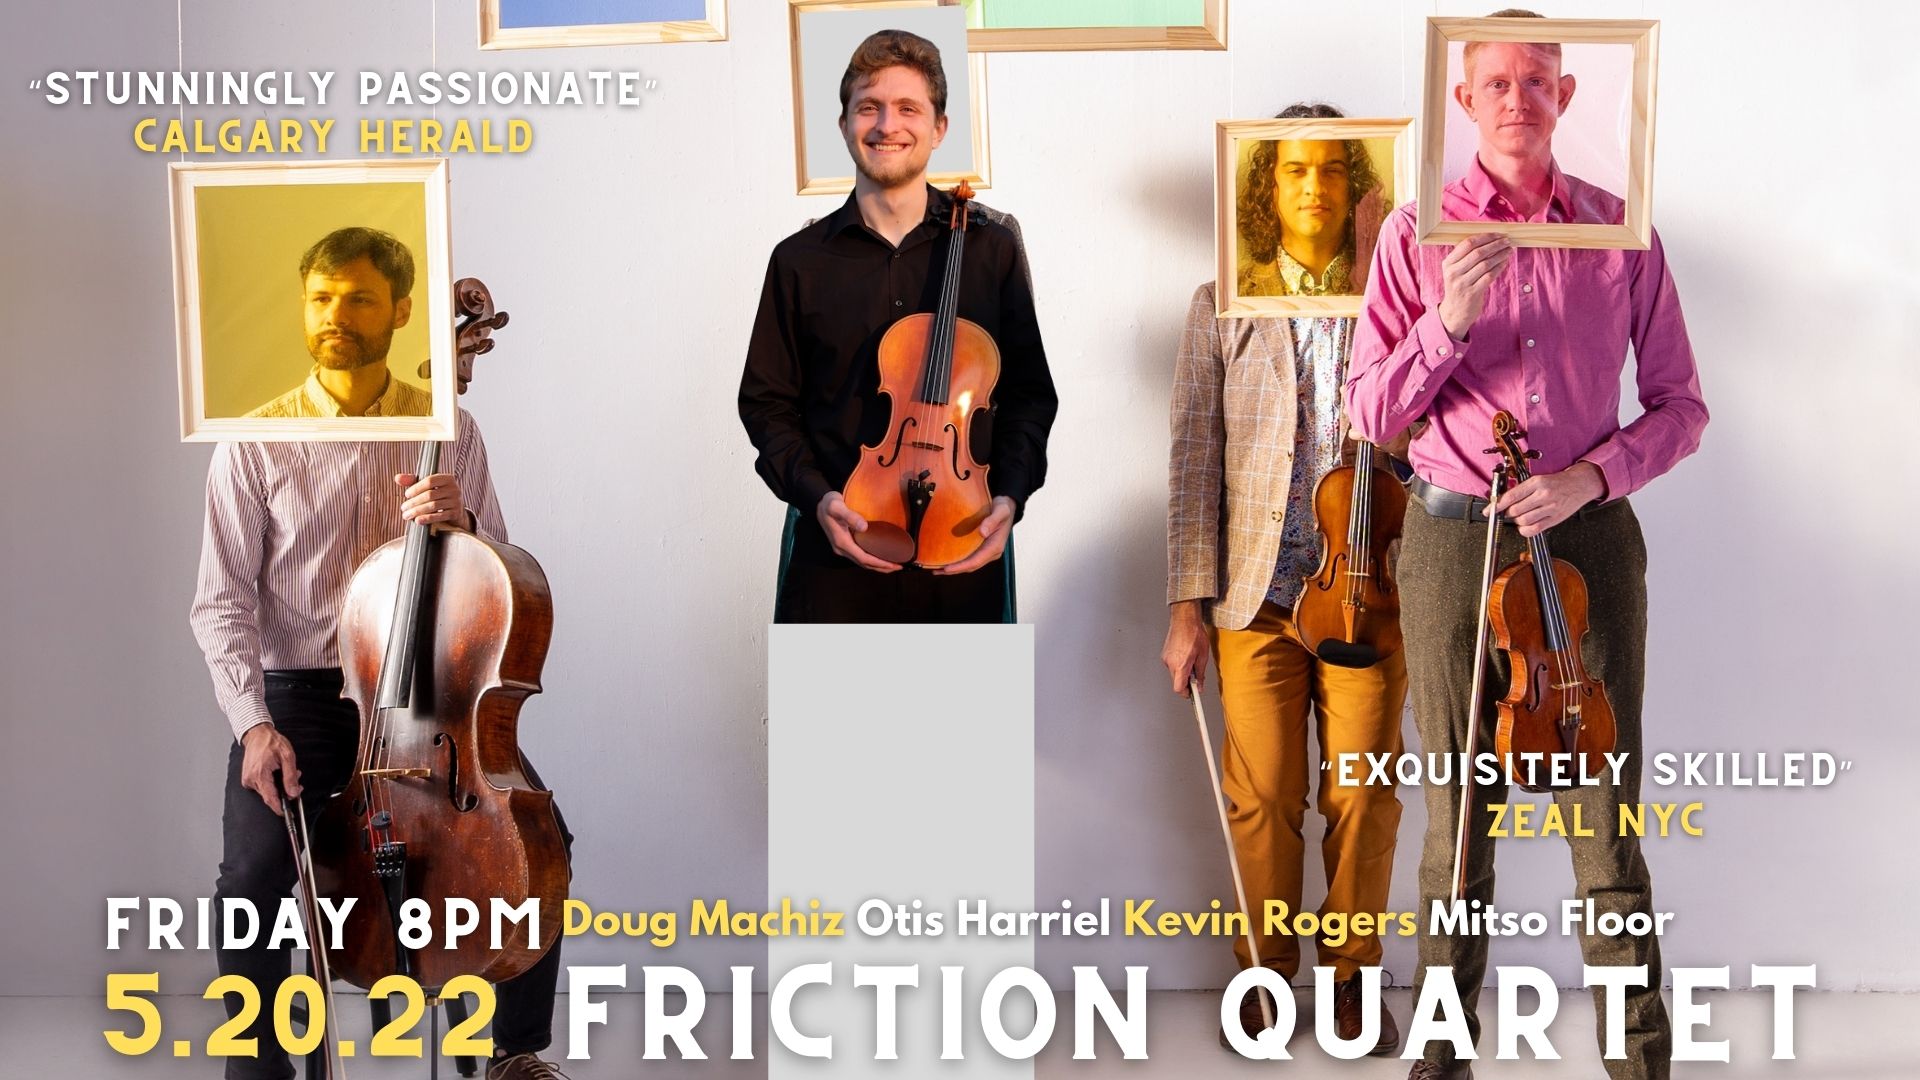 Friction Quartet